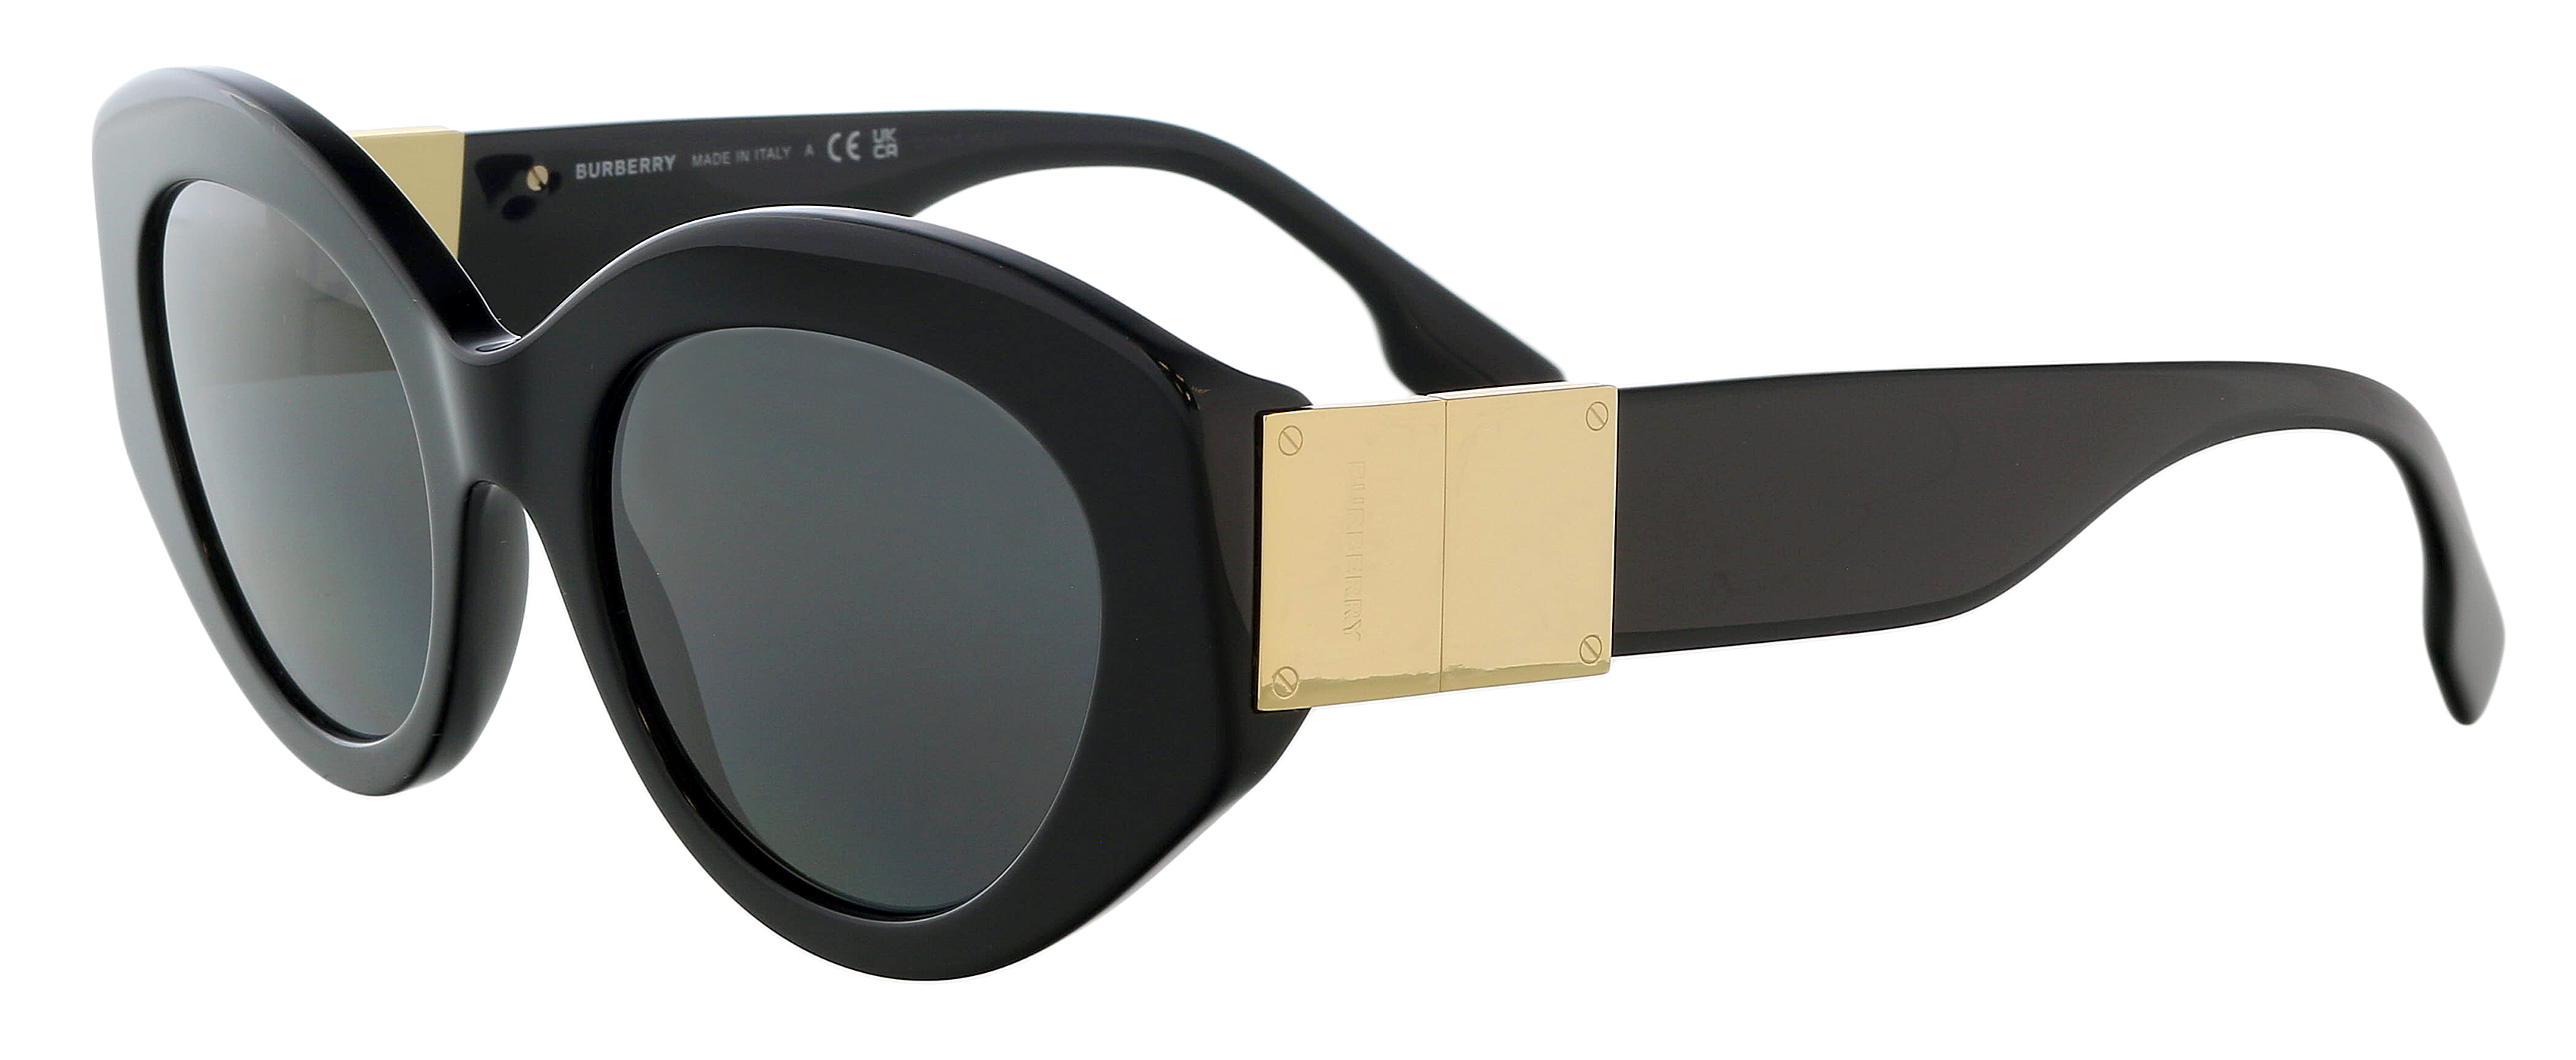 Burberry Round Sunglasses Black (0BE4361 30018751 Sophia) in 